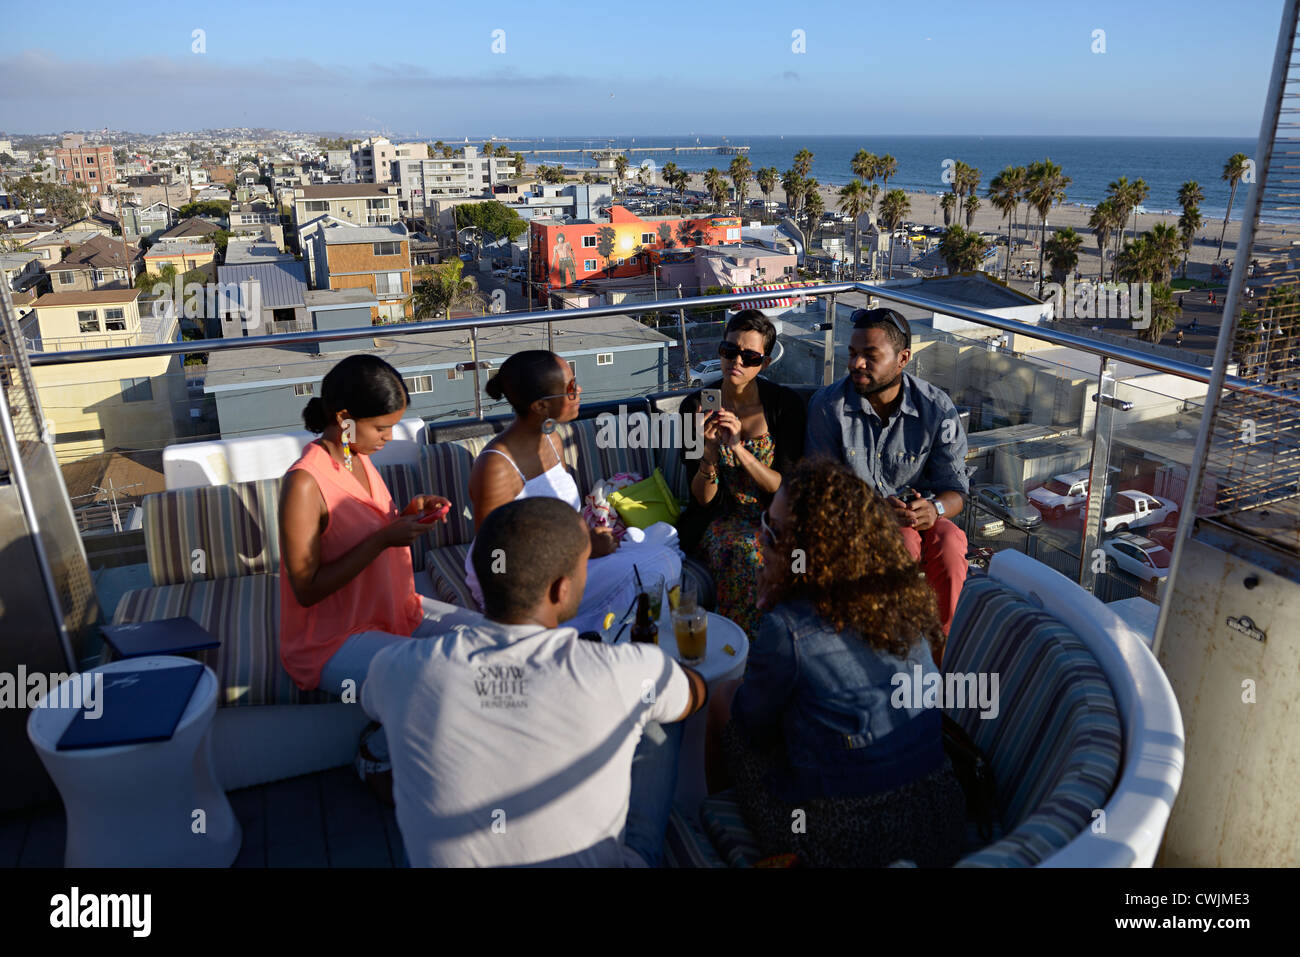 rooftop hotel scene venice beach california Stock Photo